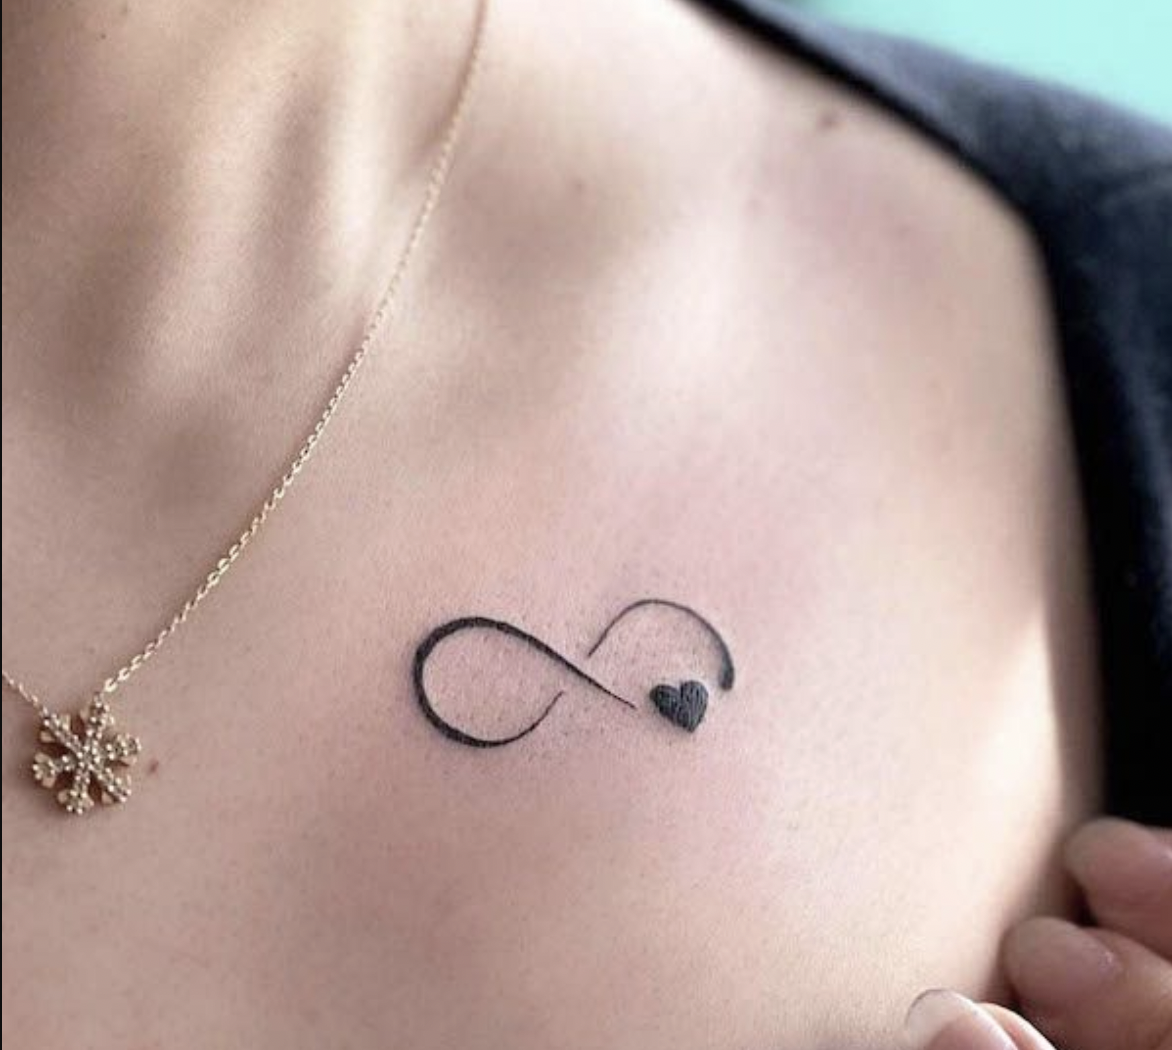 infinity-tattoo